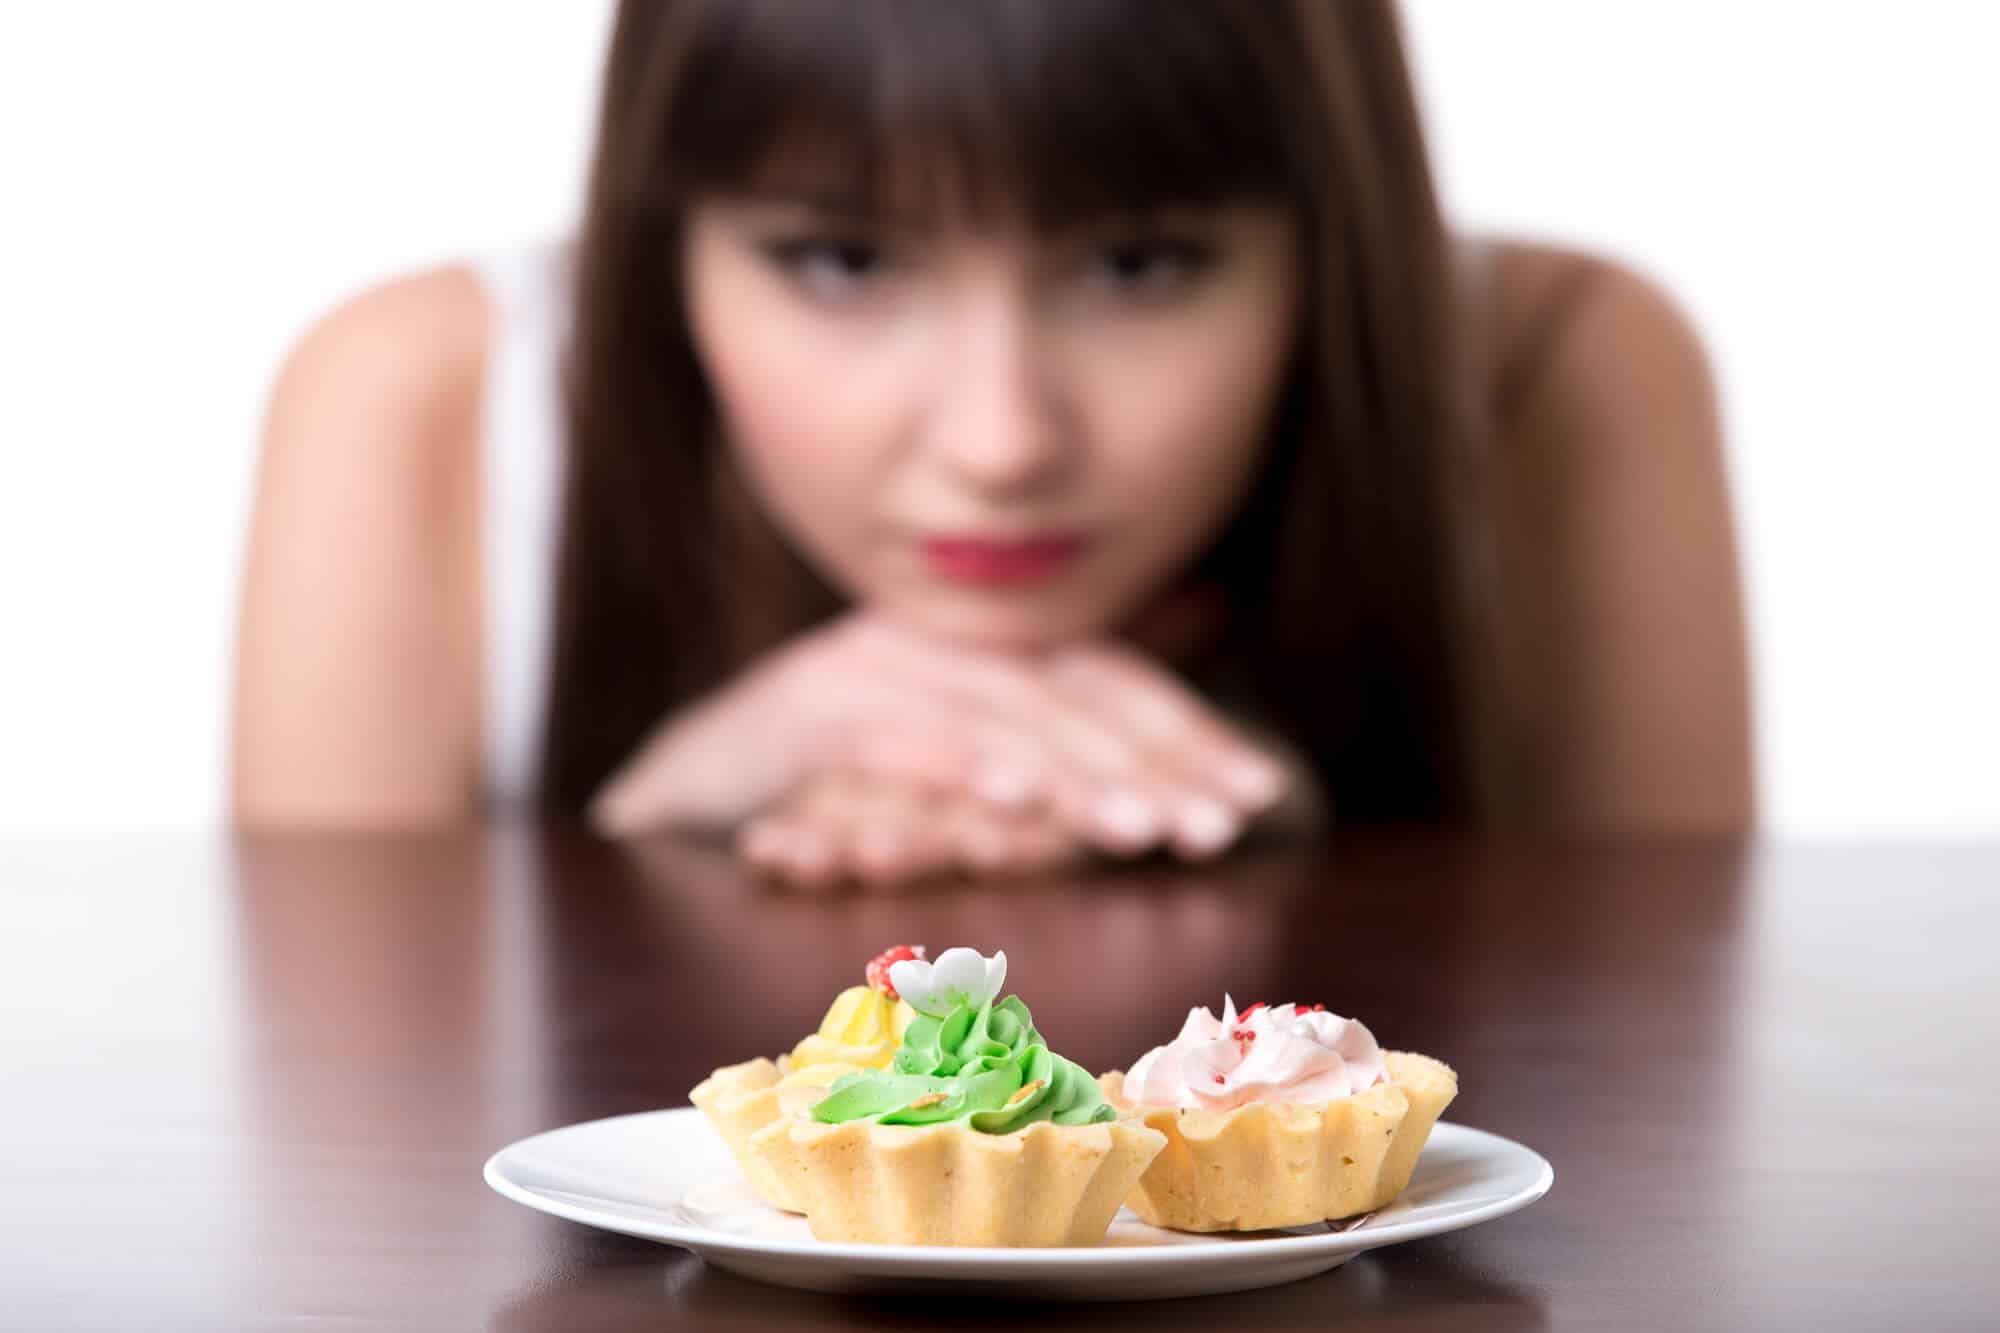 cravings and addiction to sugar